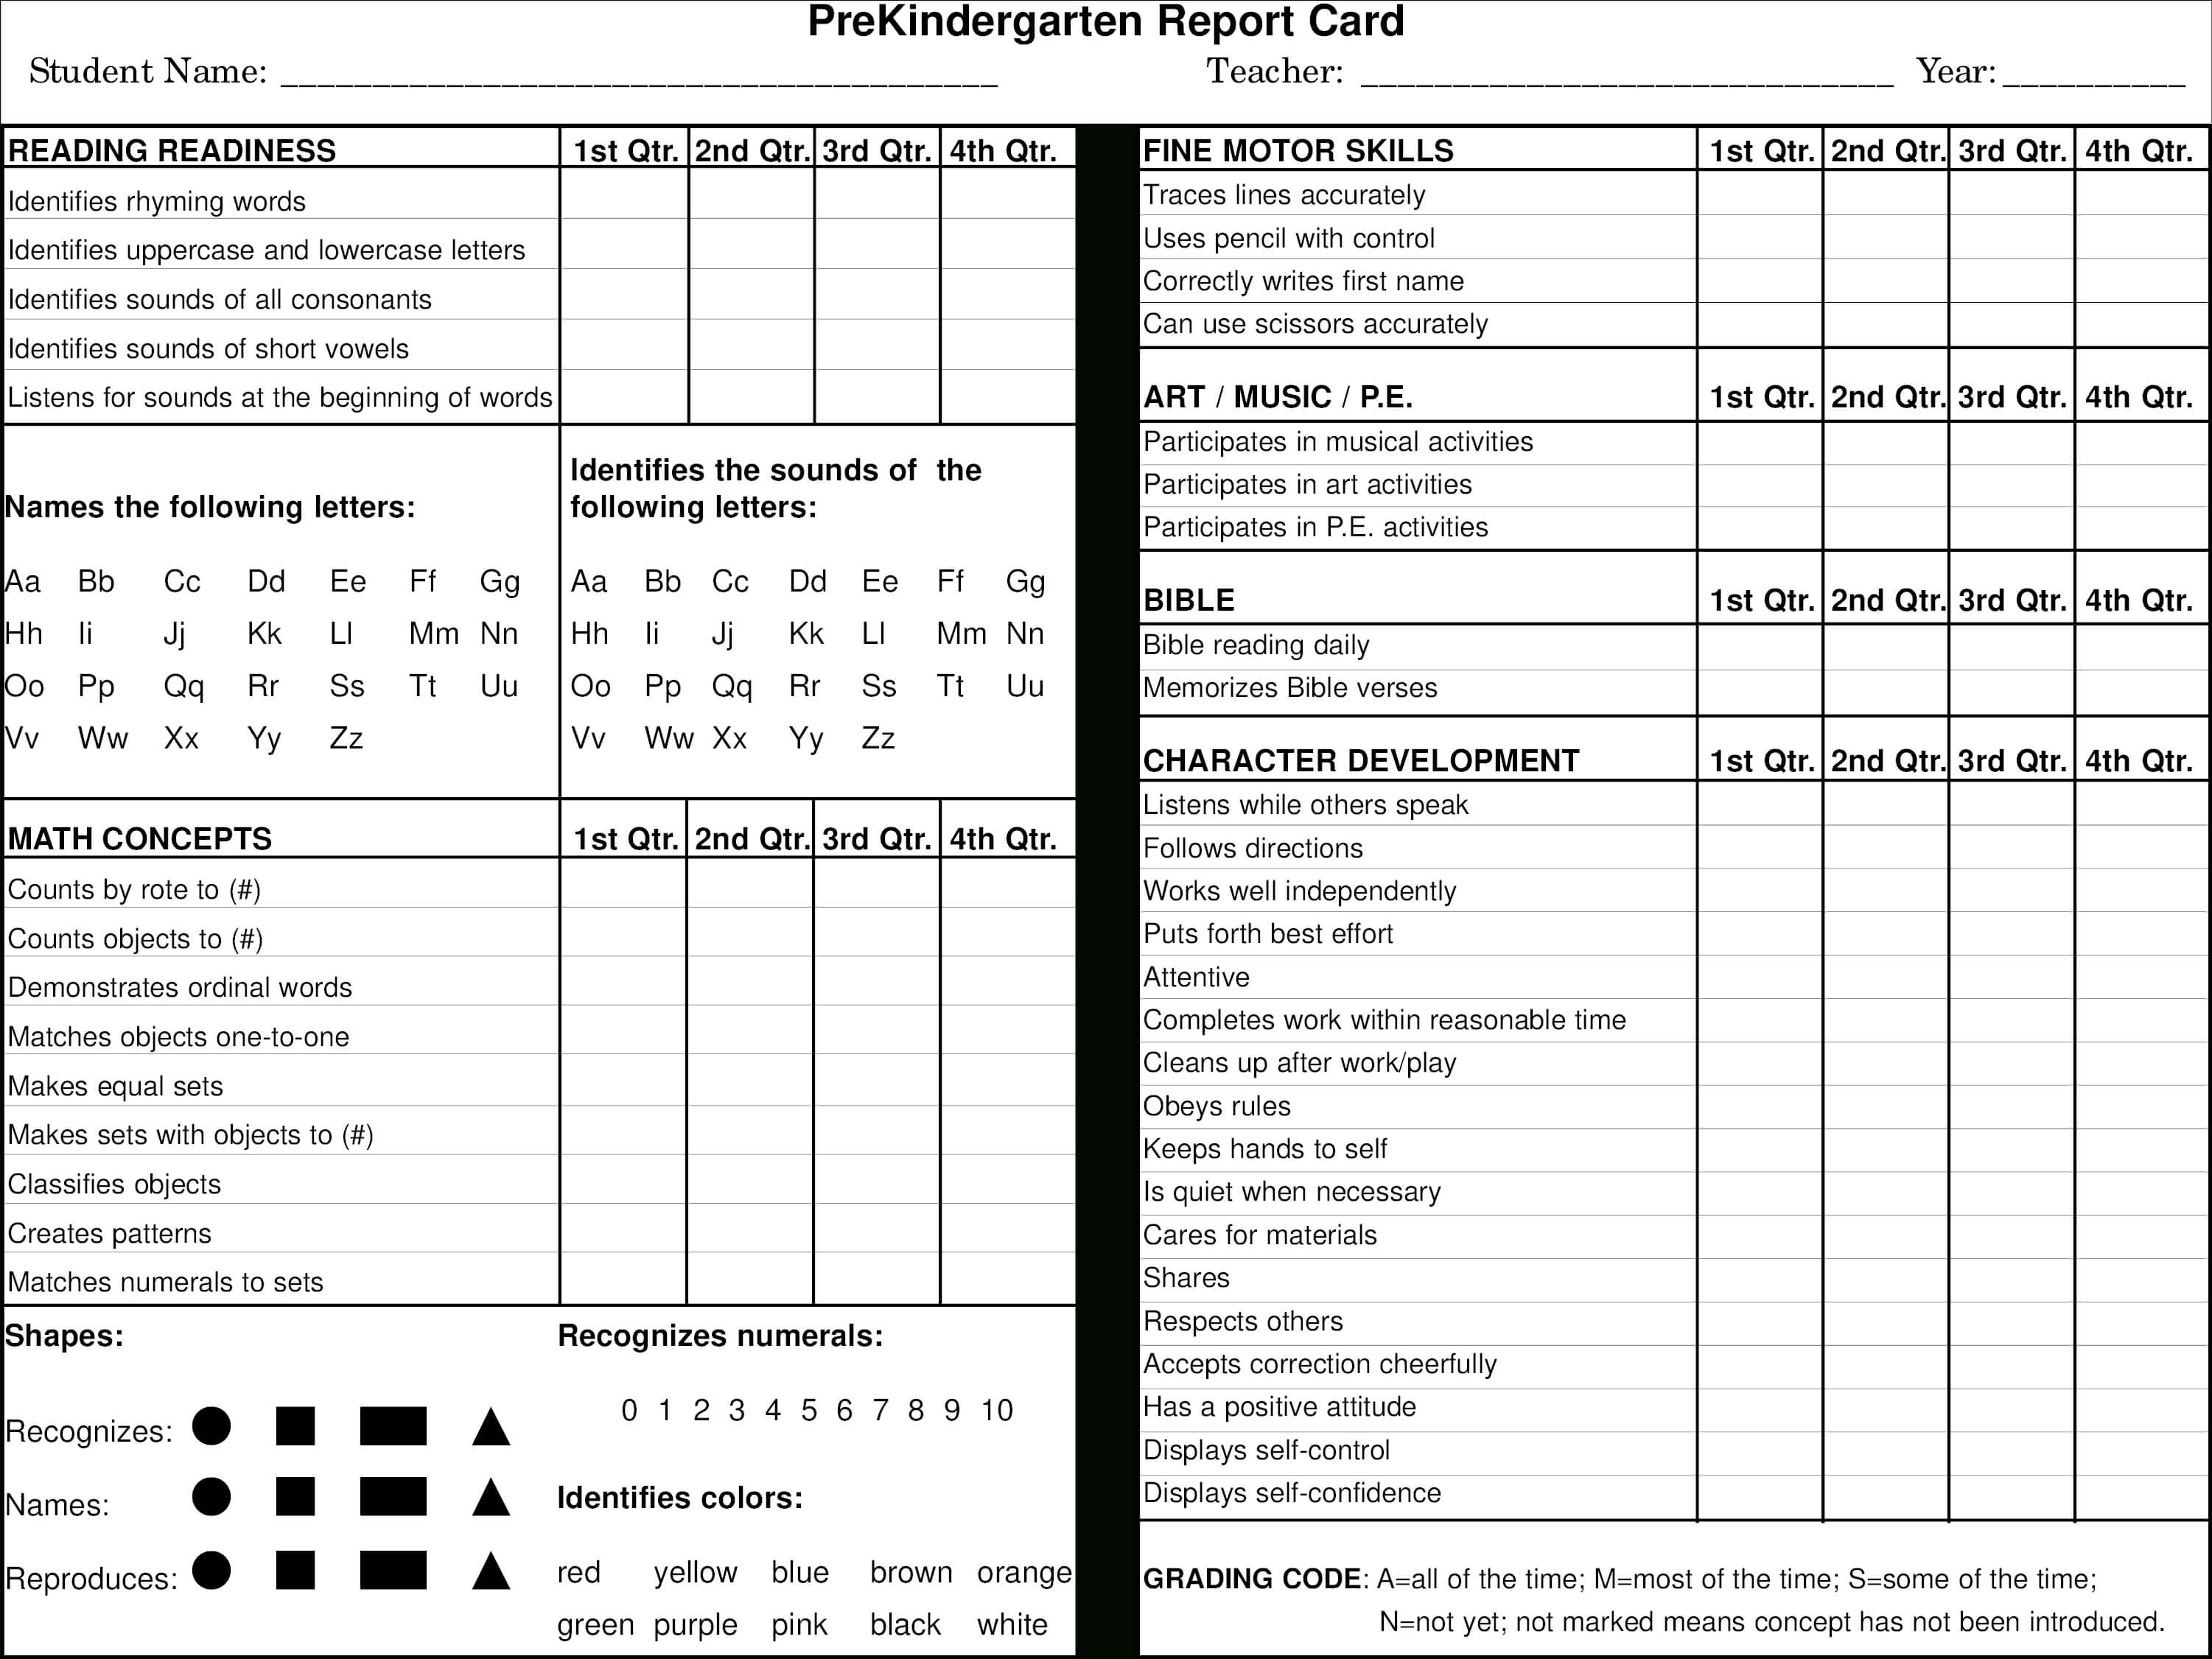 Preschool Report Card Main Image – Preschool Progress Report Intended For Character Report Card Template